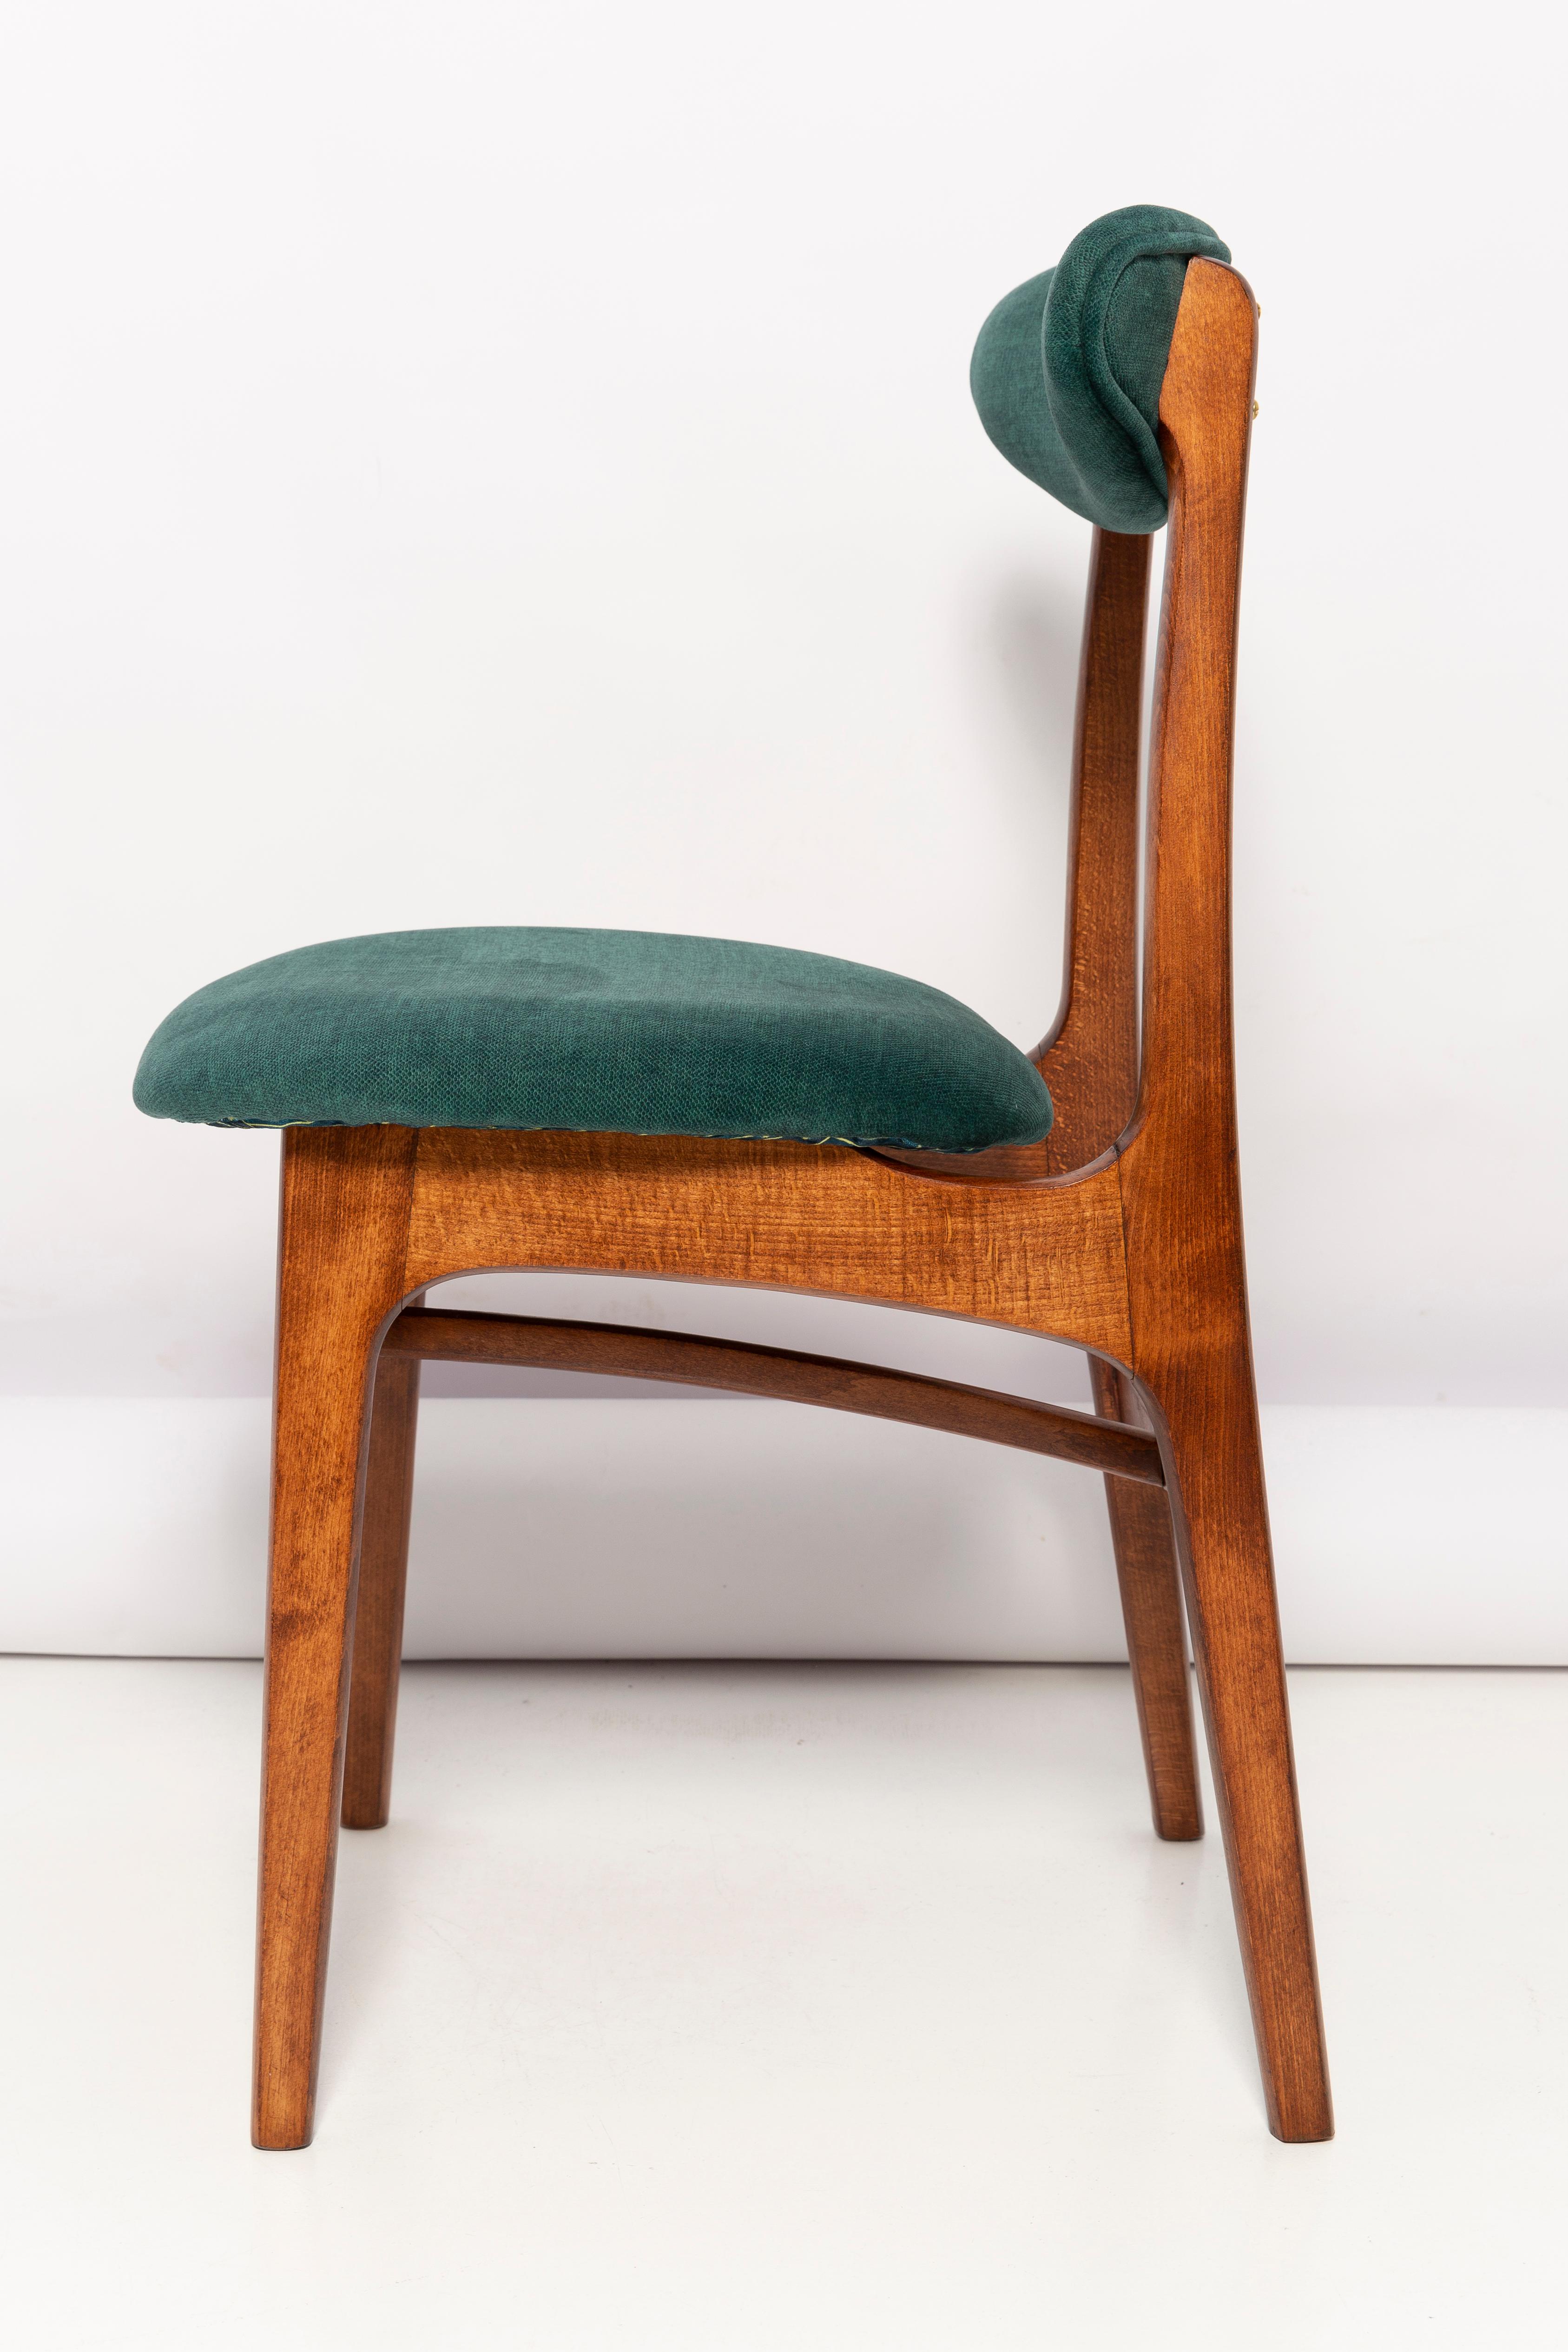 Mid Century Green Velvet Chair Designed by Rajmund Halas, Poland, 1960s For Sale 3